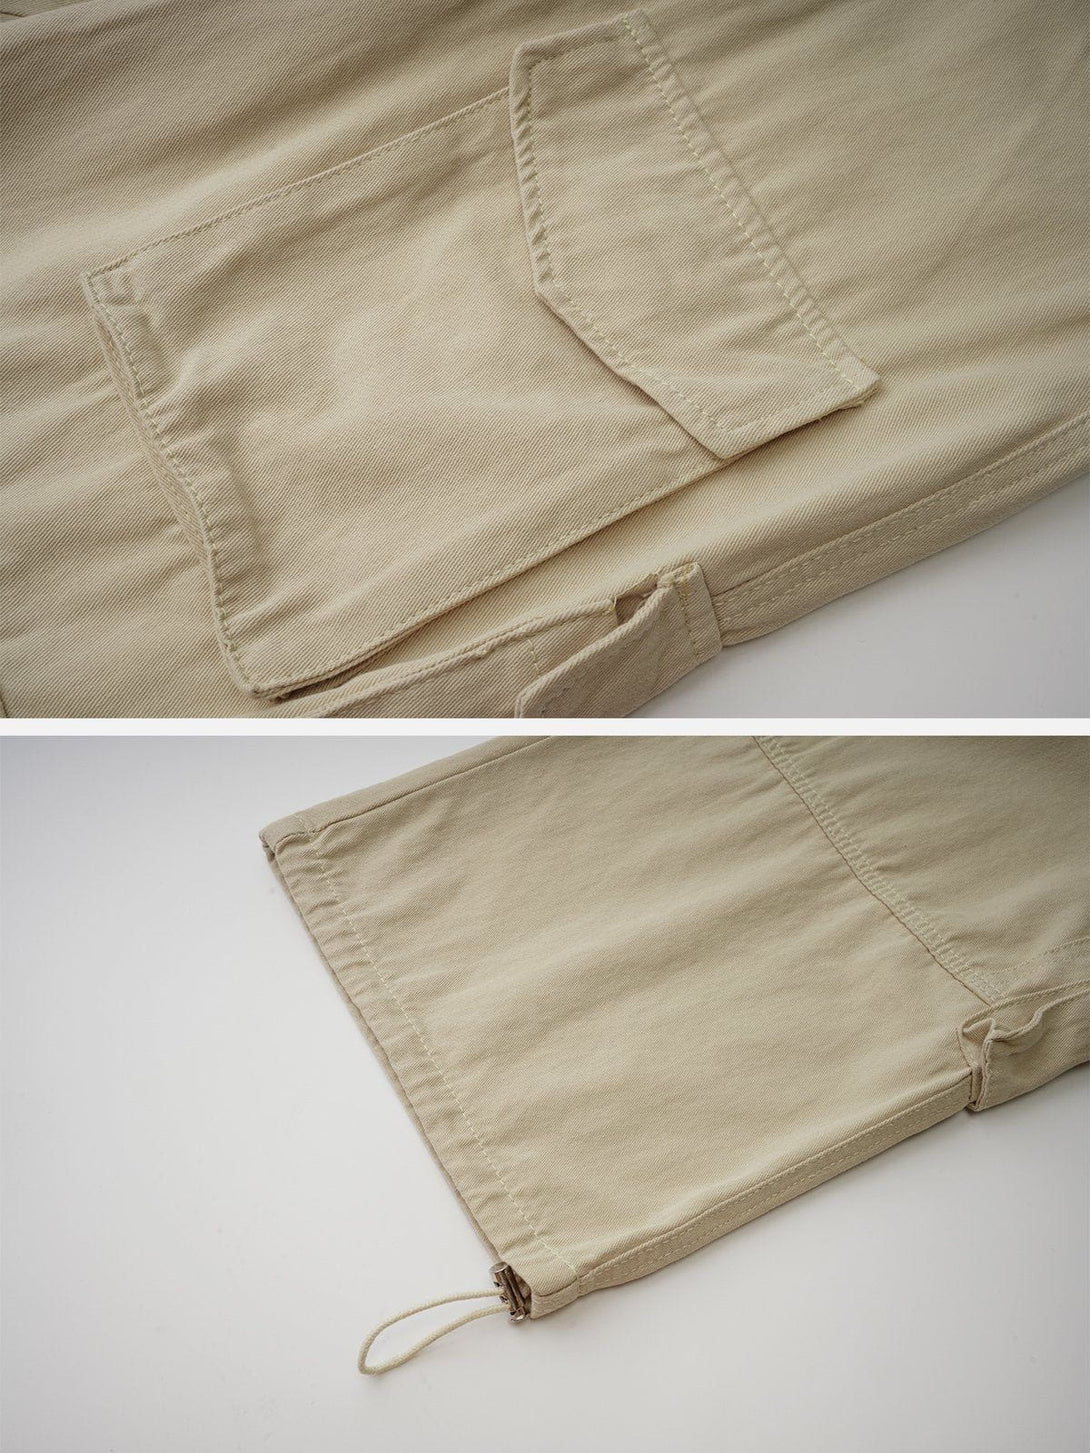 Levefly - Vintage Multi-Pocket Solid Cargo Pants - Streetwear Fashion - levefly.com